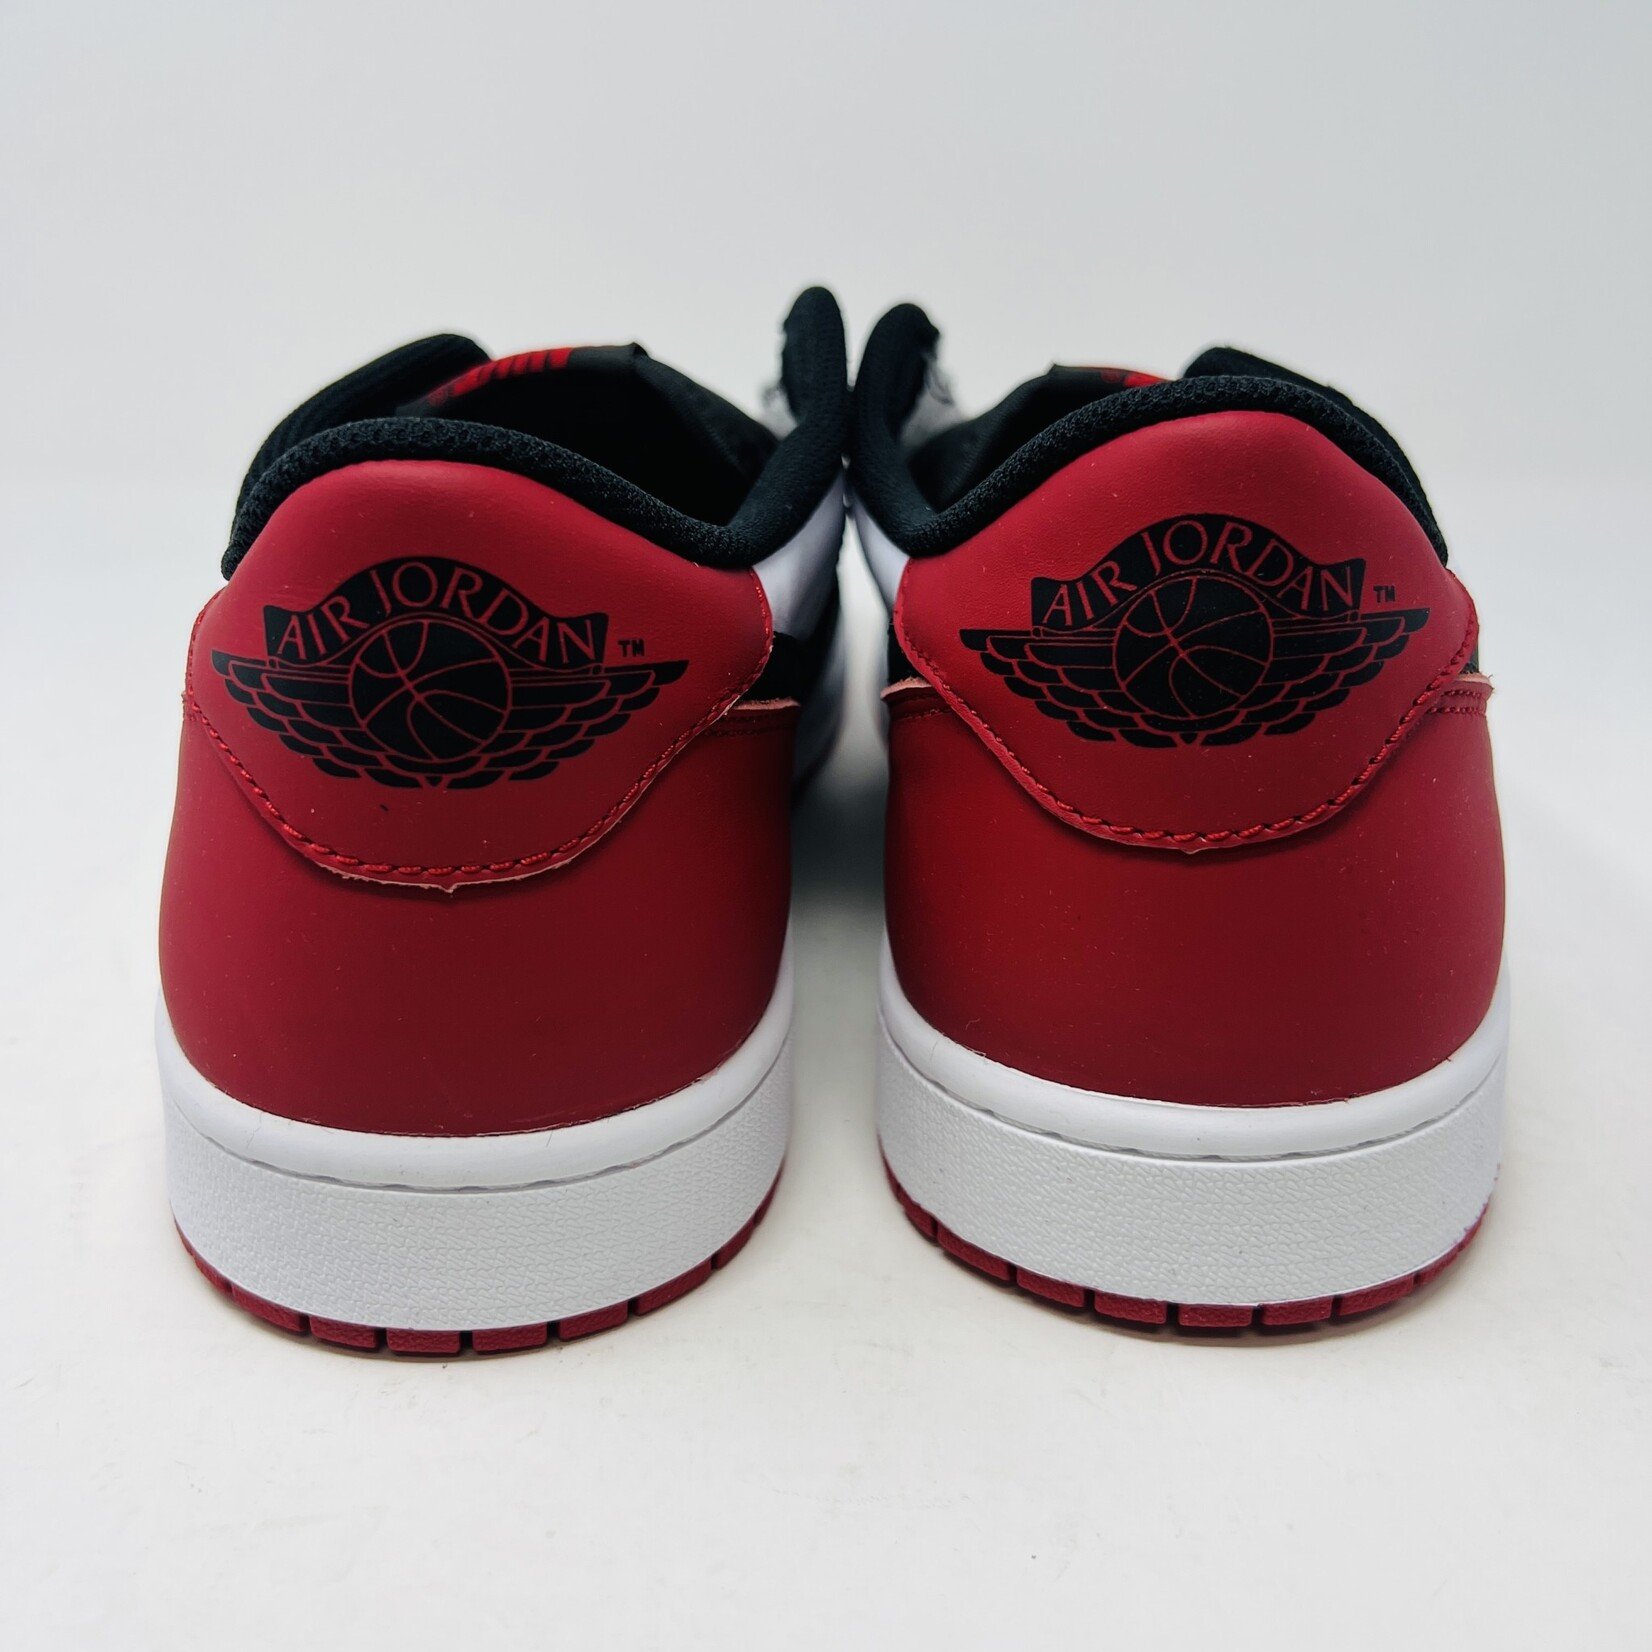 Jordan 1 Strap Low Black Toe for Sale, Authenticity Guaranteed